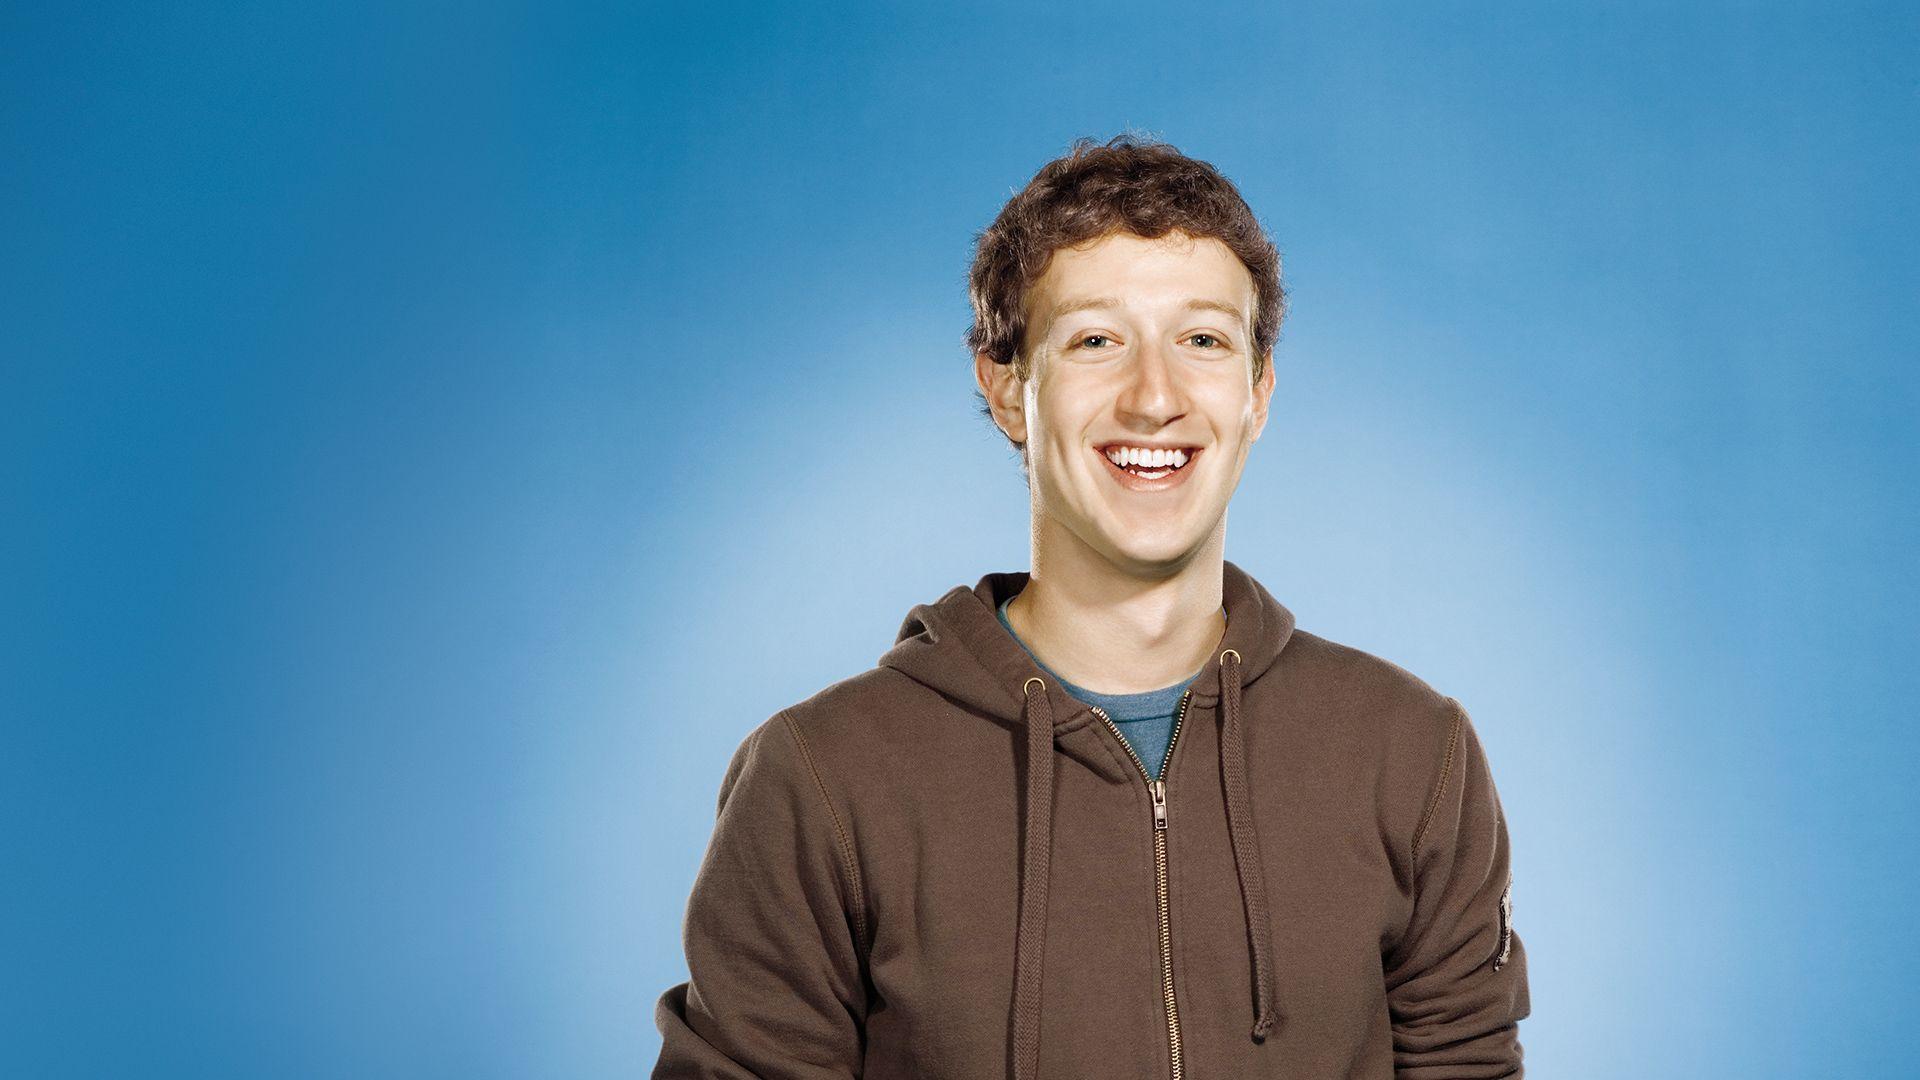 Awesome Mark Zuckerberg HD Wallpaper Free Download